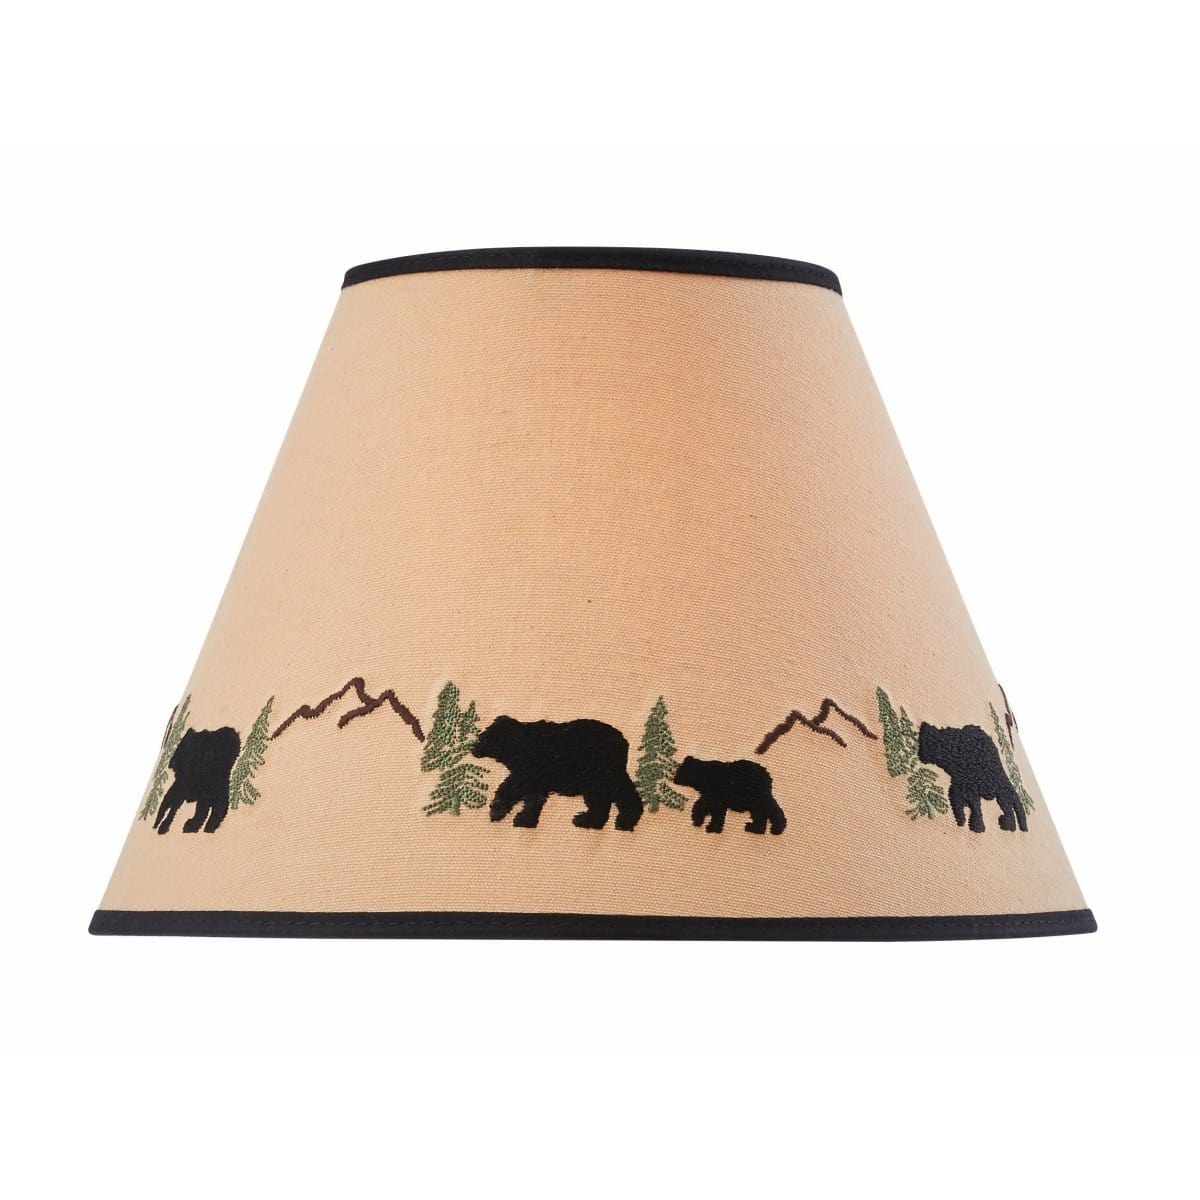 Black Bear washer Fabric Lamp Shade 12" Diameter-Park Designs-The Village Merchant